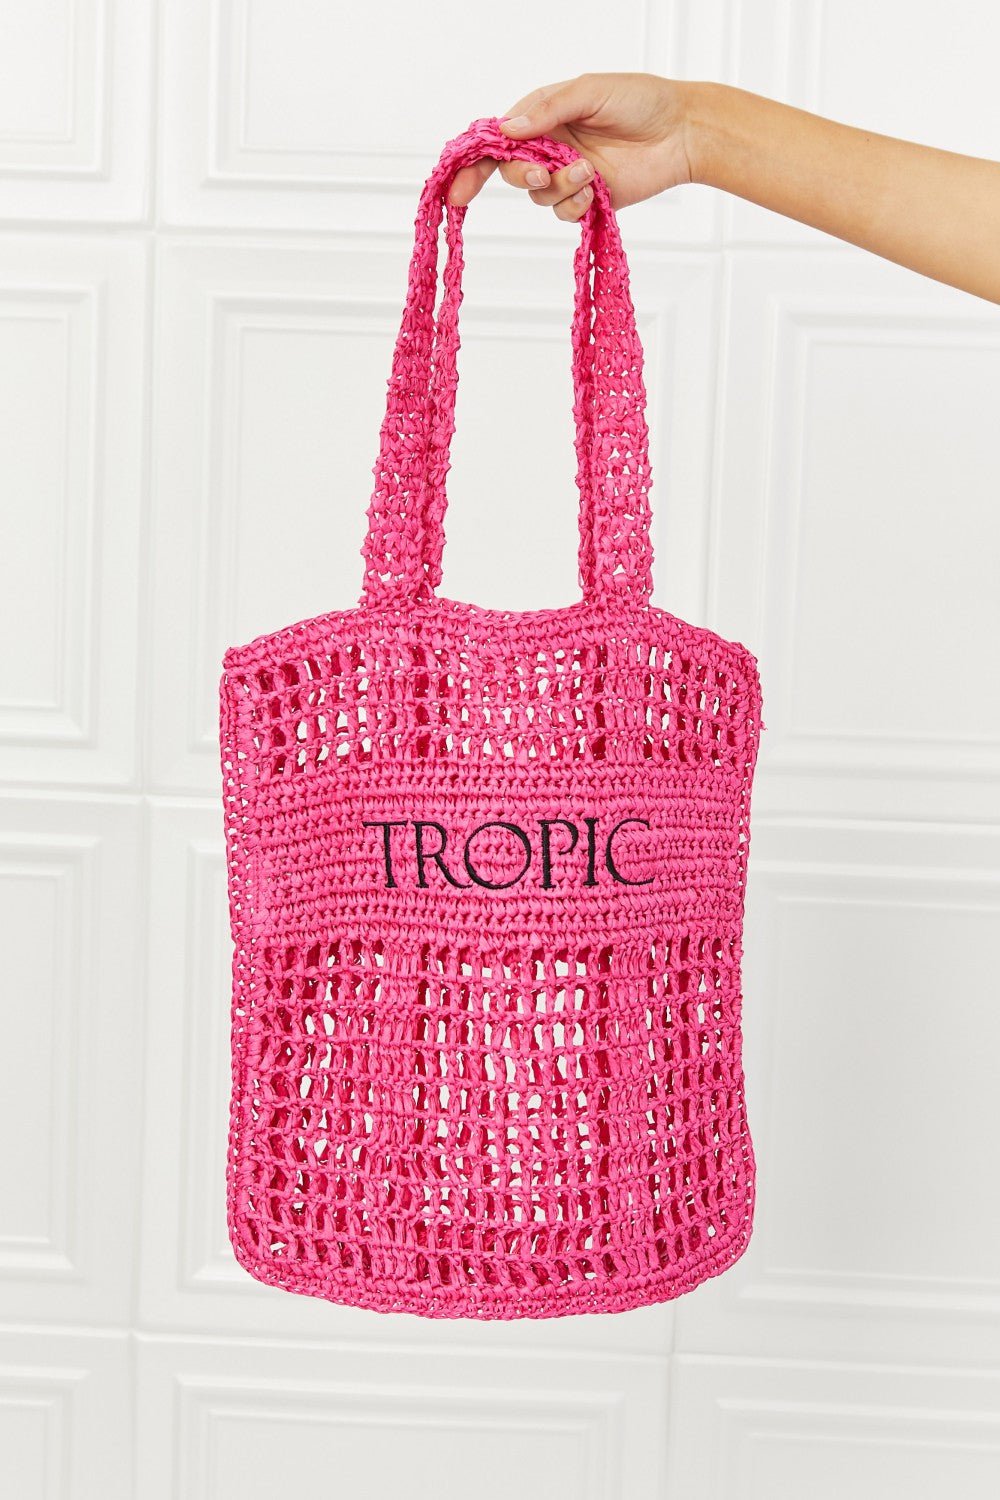 Tropic Straw Tote Bag in Hot PinkTote BagFame